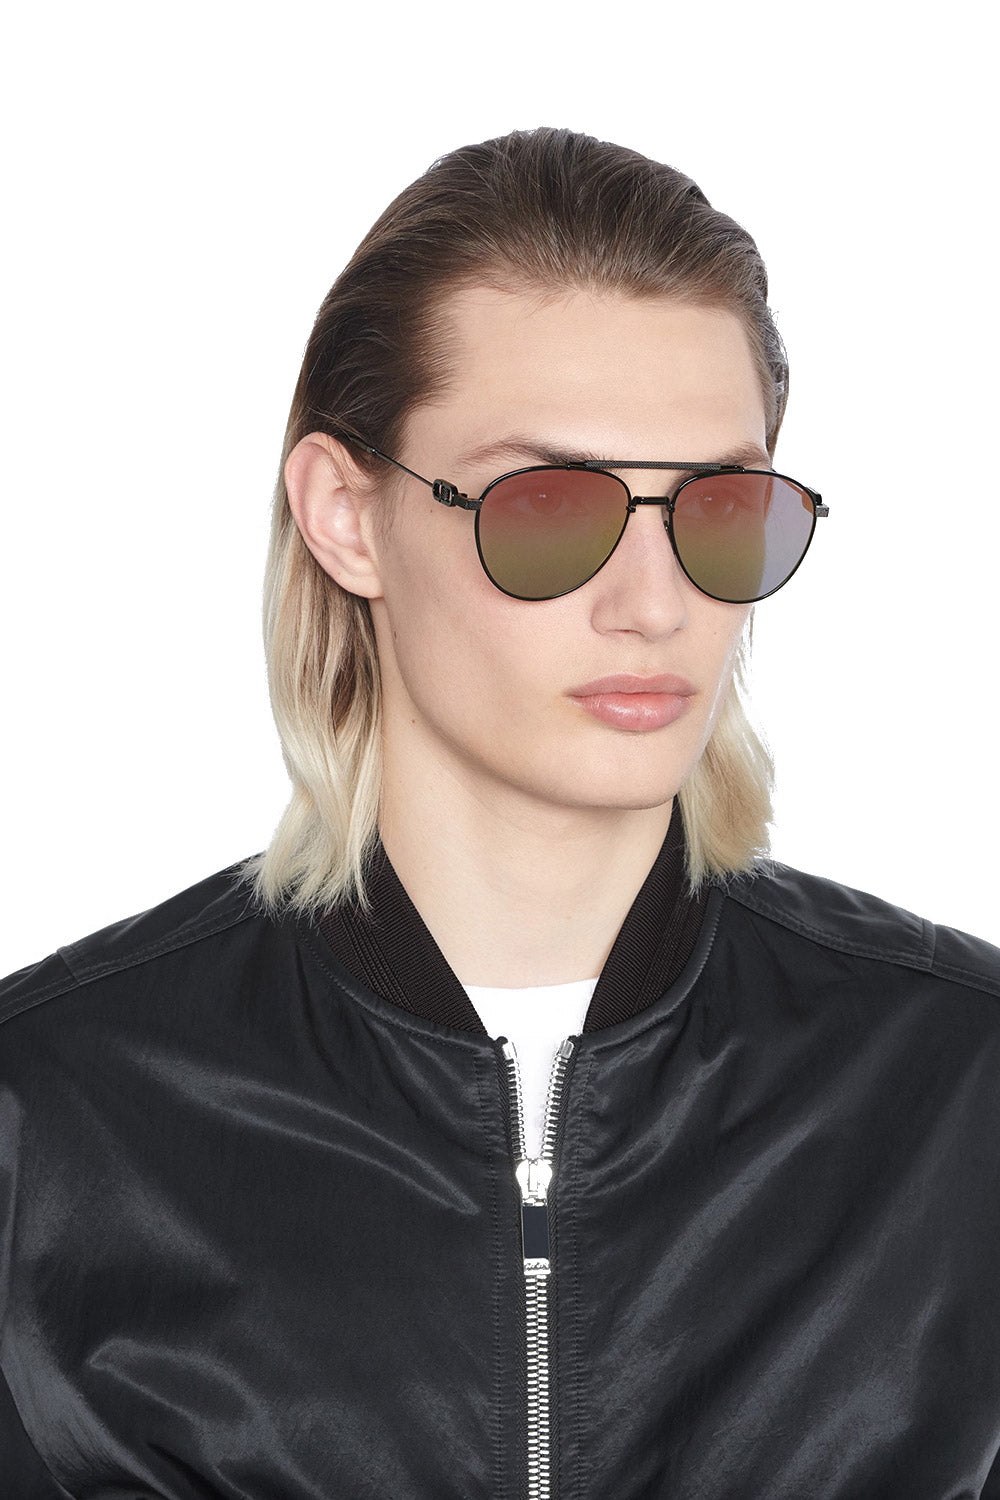 Dior Eyewear - CD Link R1U aviator sunglasses Dior Eyewear